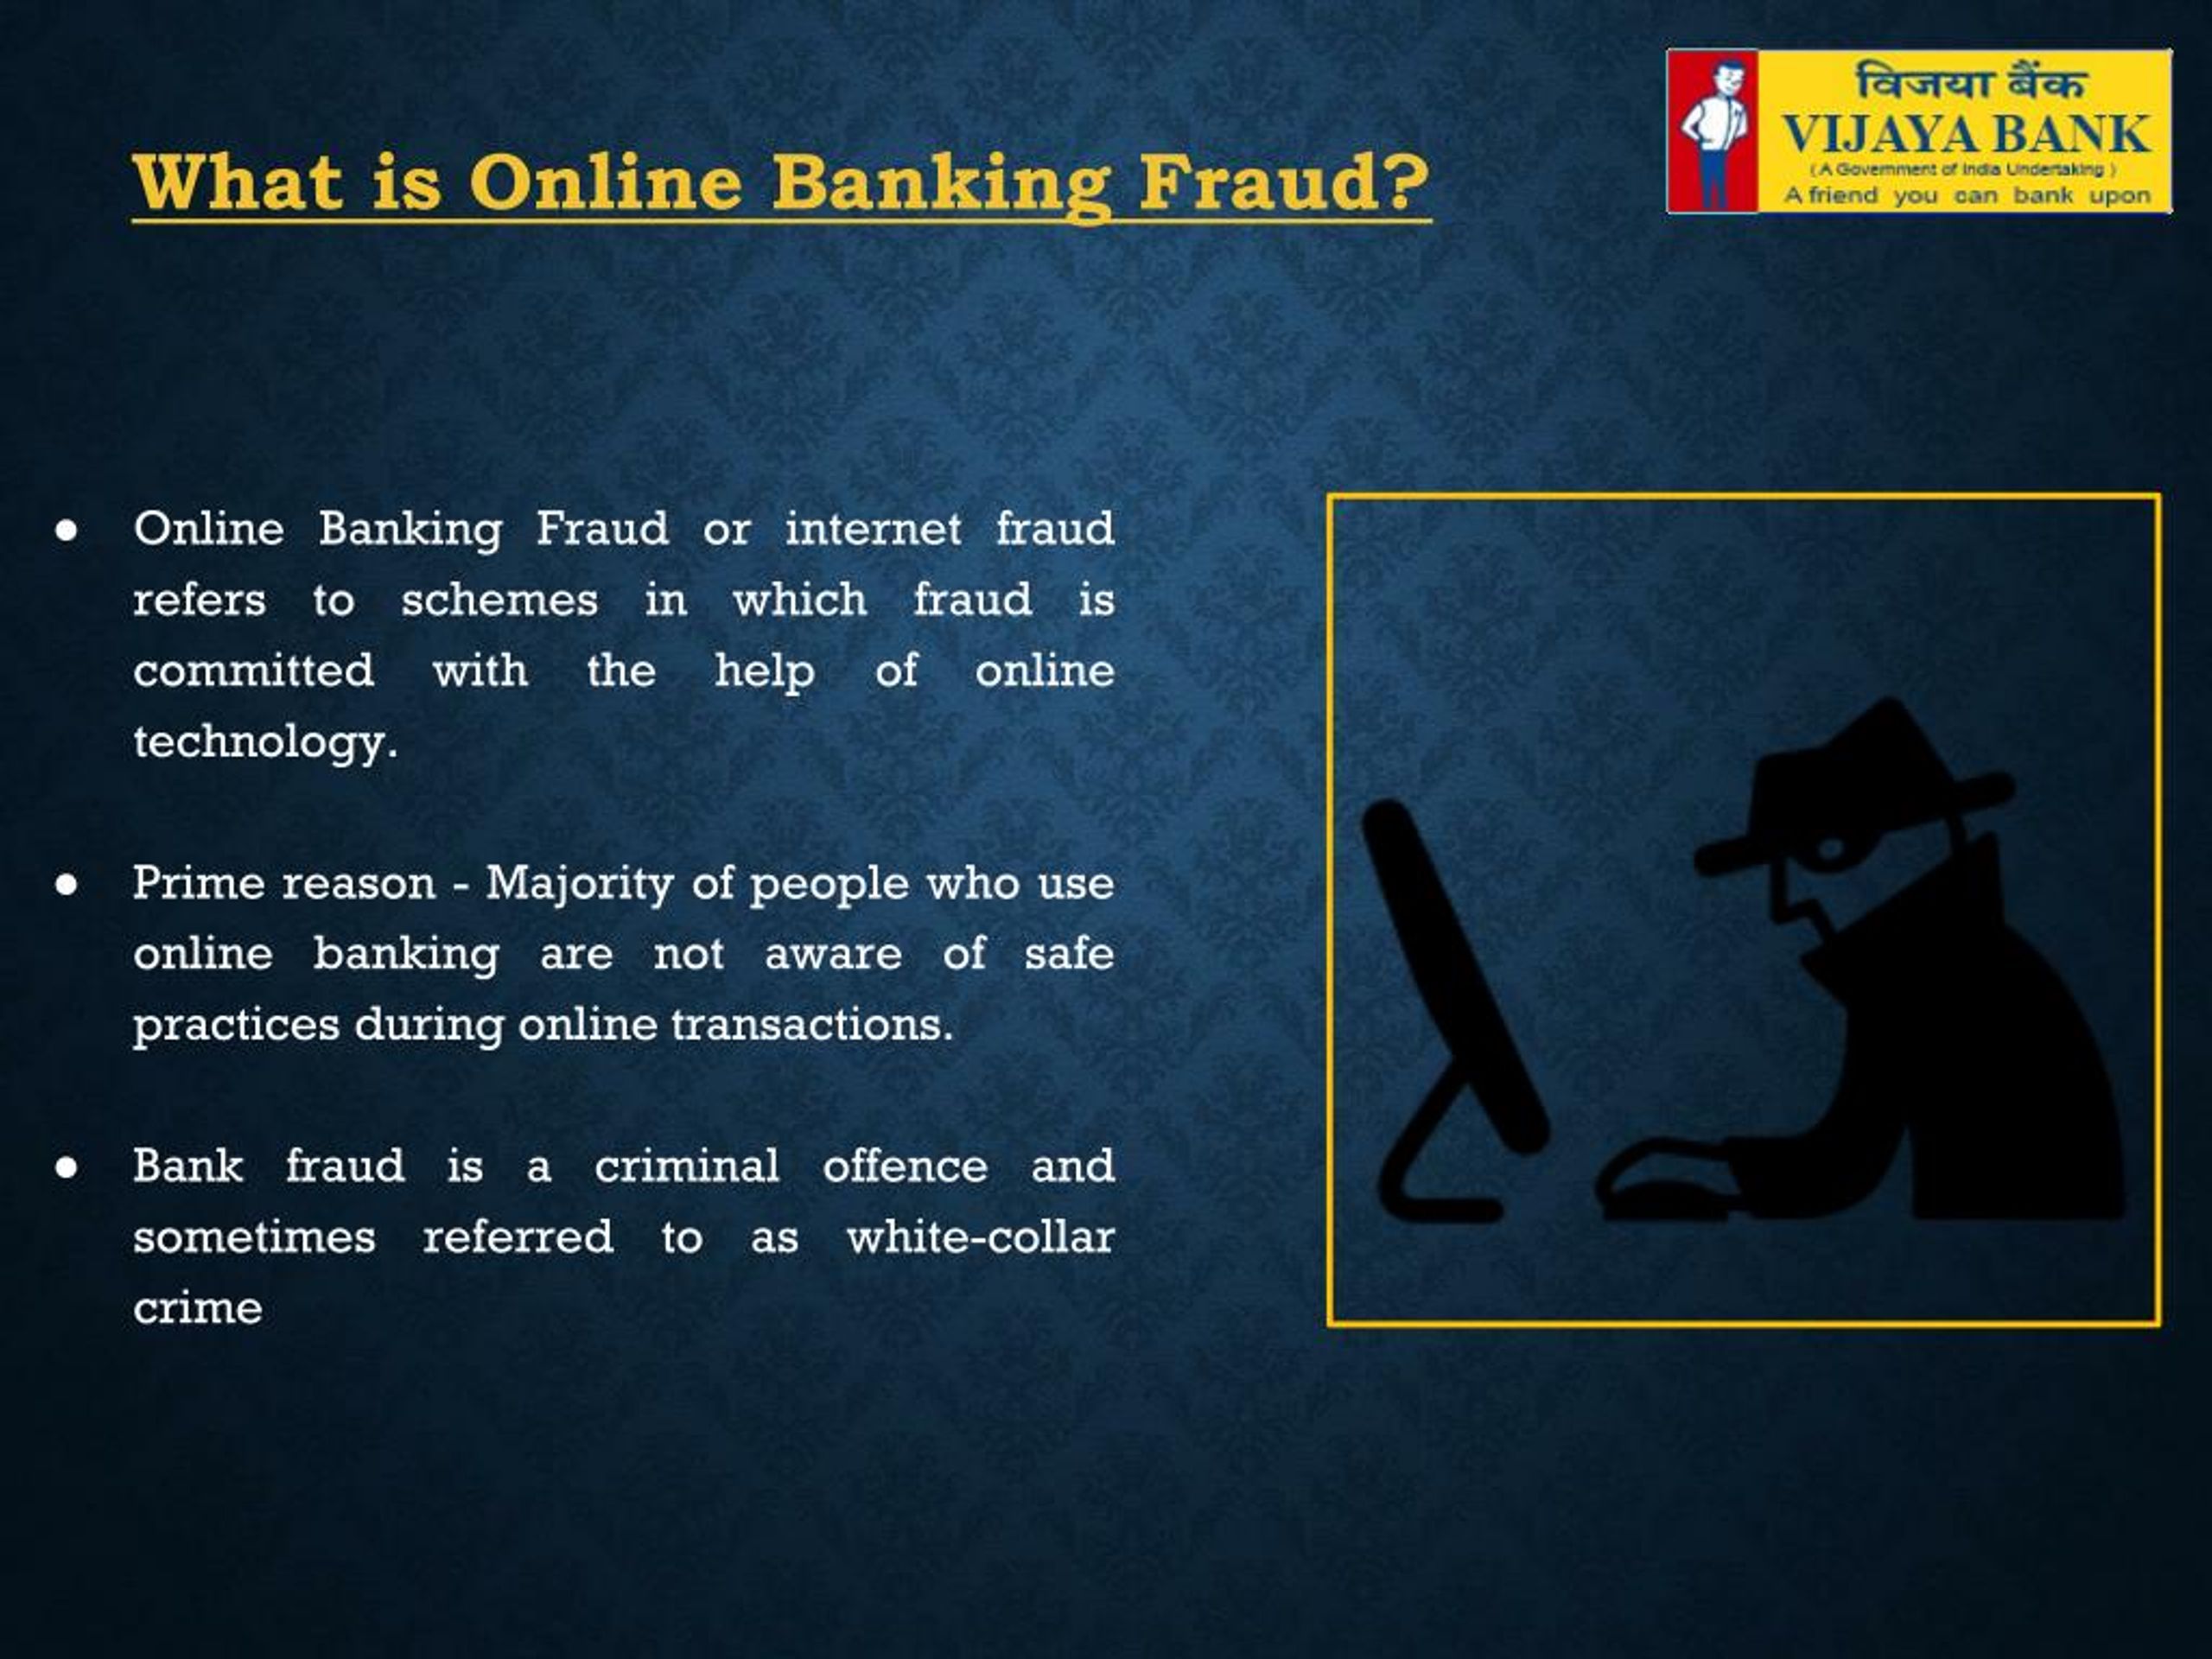 online banking frauds case study